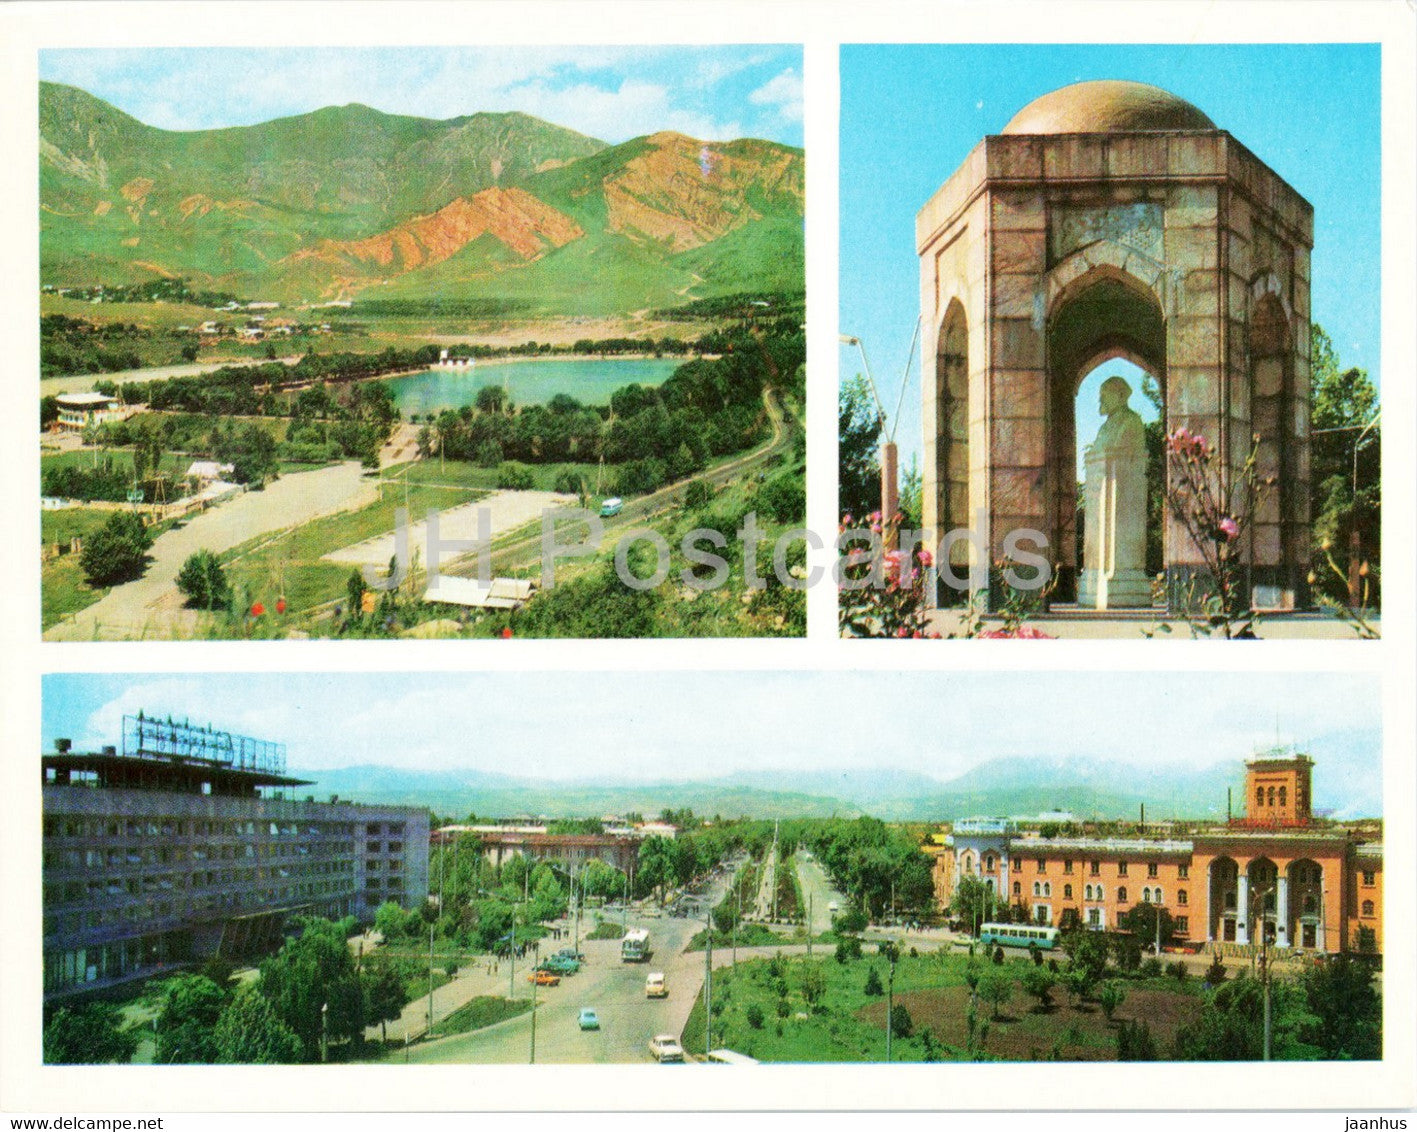 Dushanbe - Lake Varzob - Sadriddin Aini Mausoleum and Square - 1974 - Tajikistan USSR - unused - JH Postcards